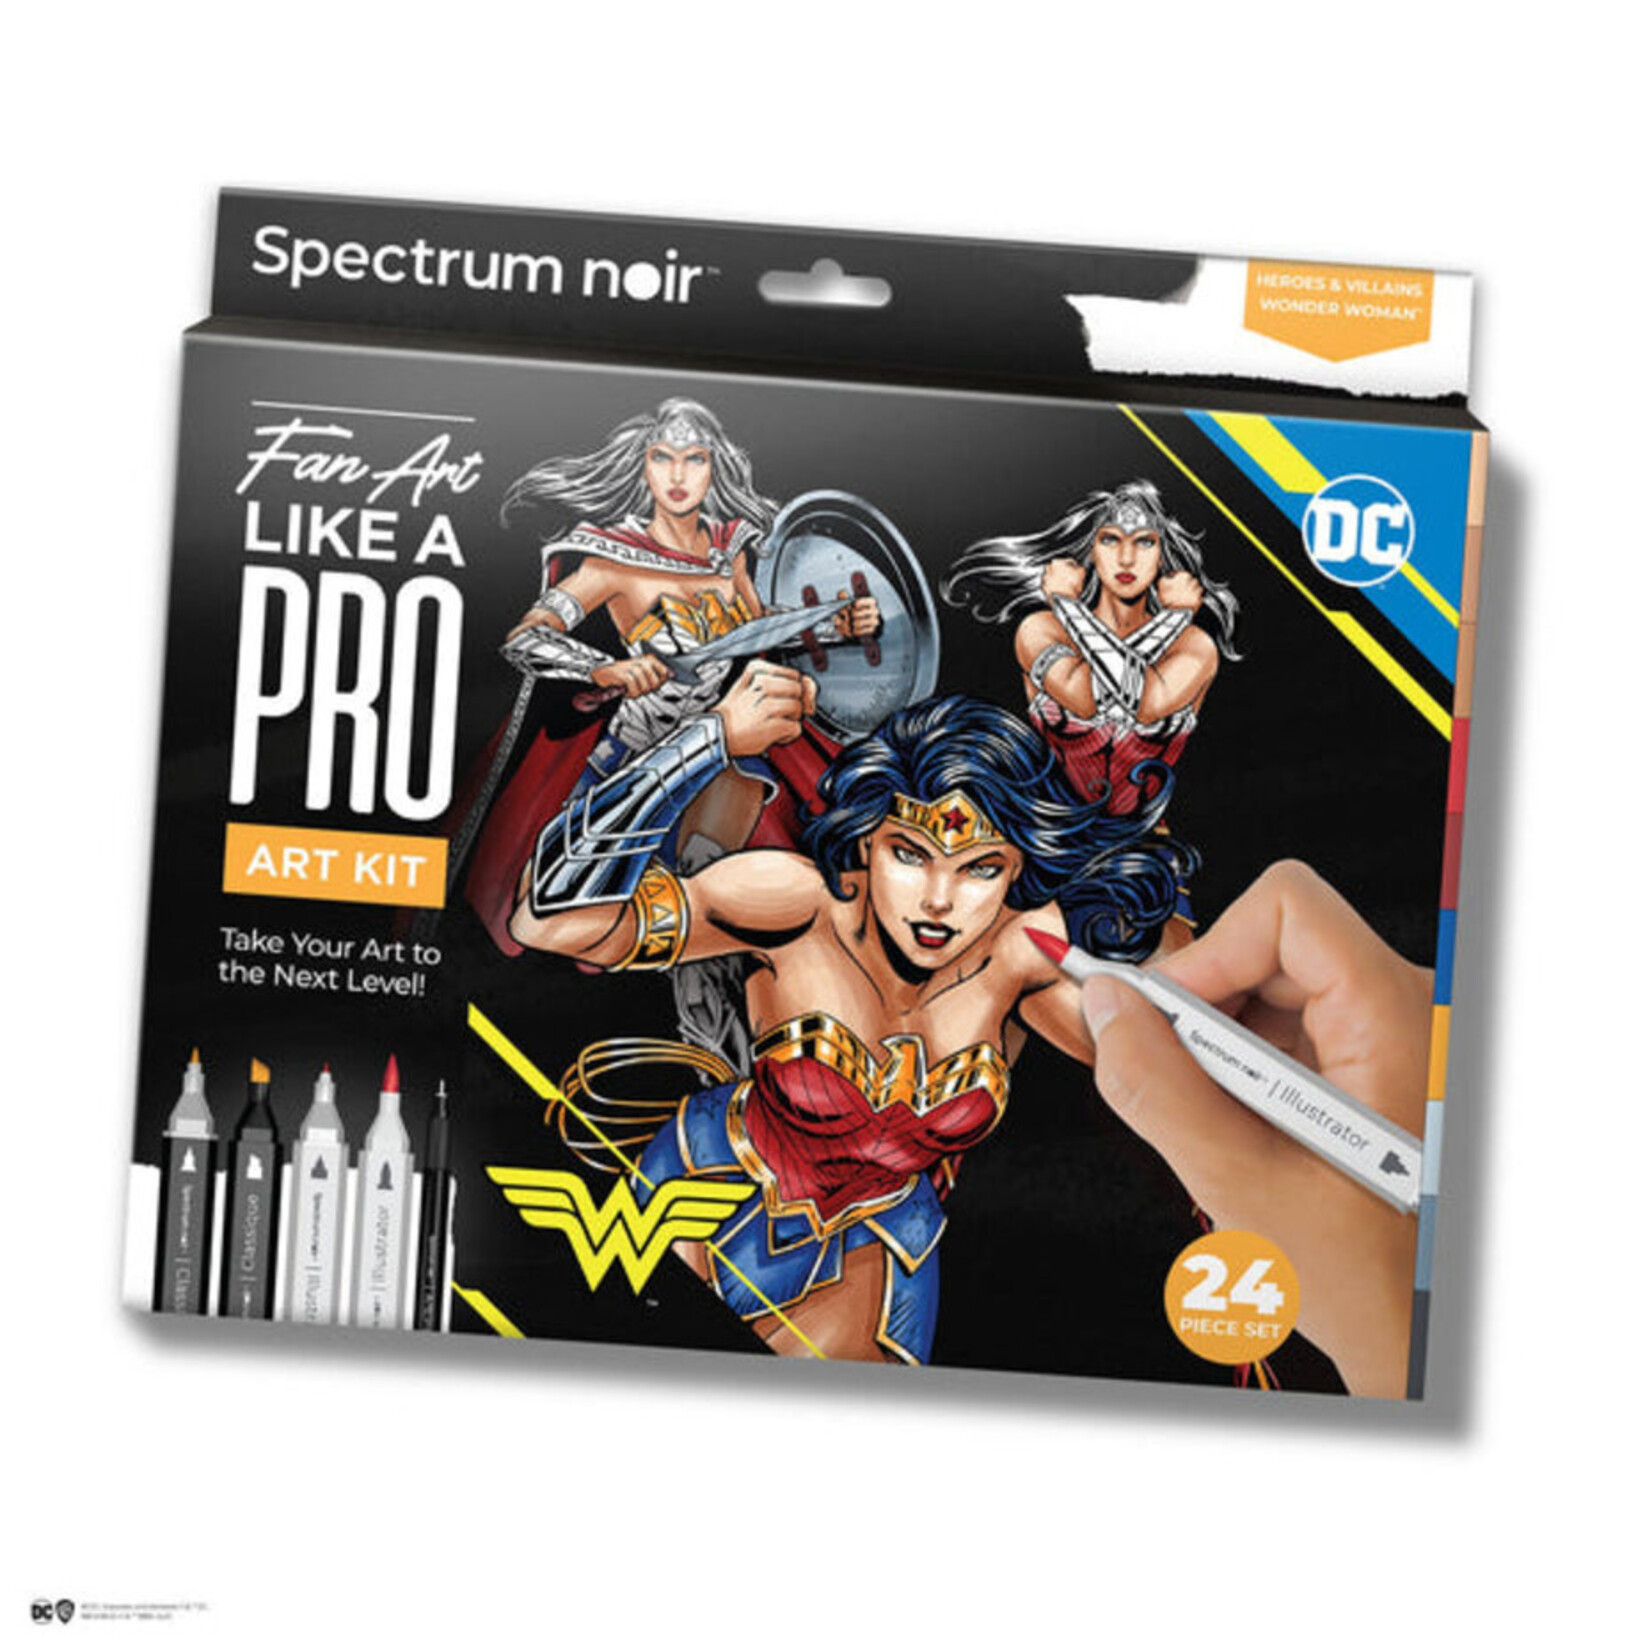 Spectrum Noir Spectrum Noir DC Comics Fan Art Like a Pro Kit Wonder Woman 24 pcs